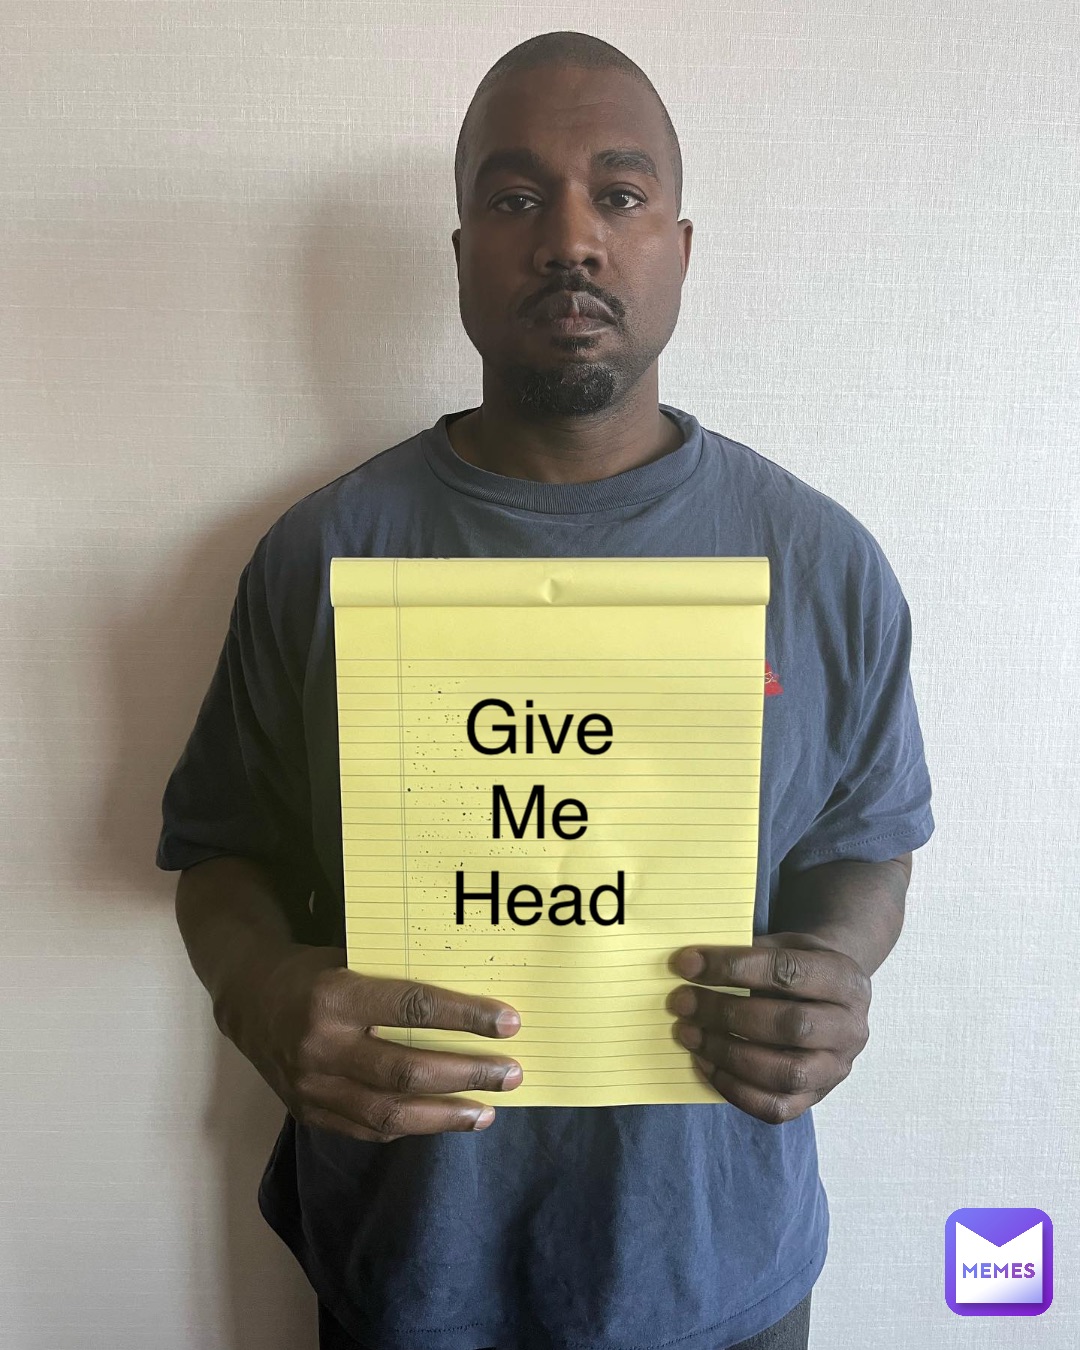 Give
Me
Head